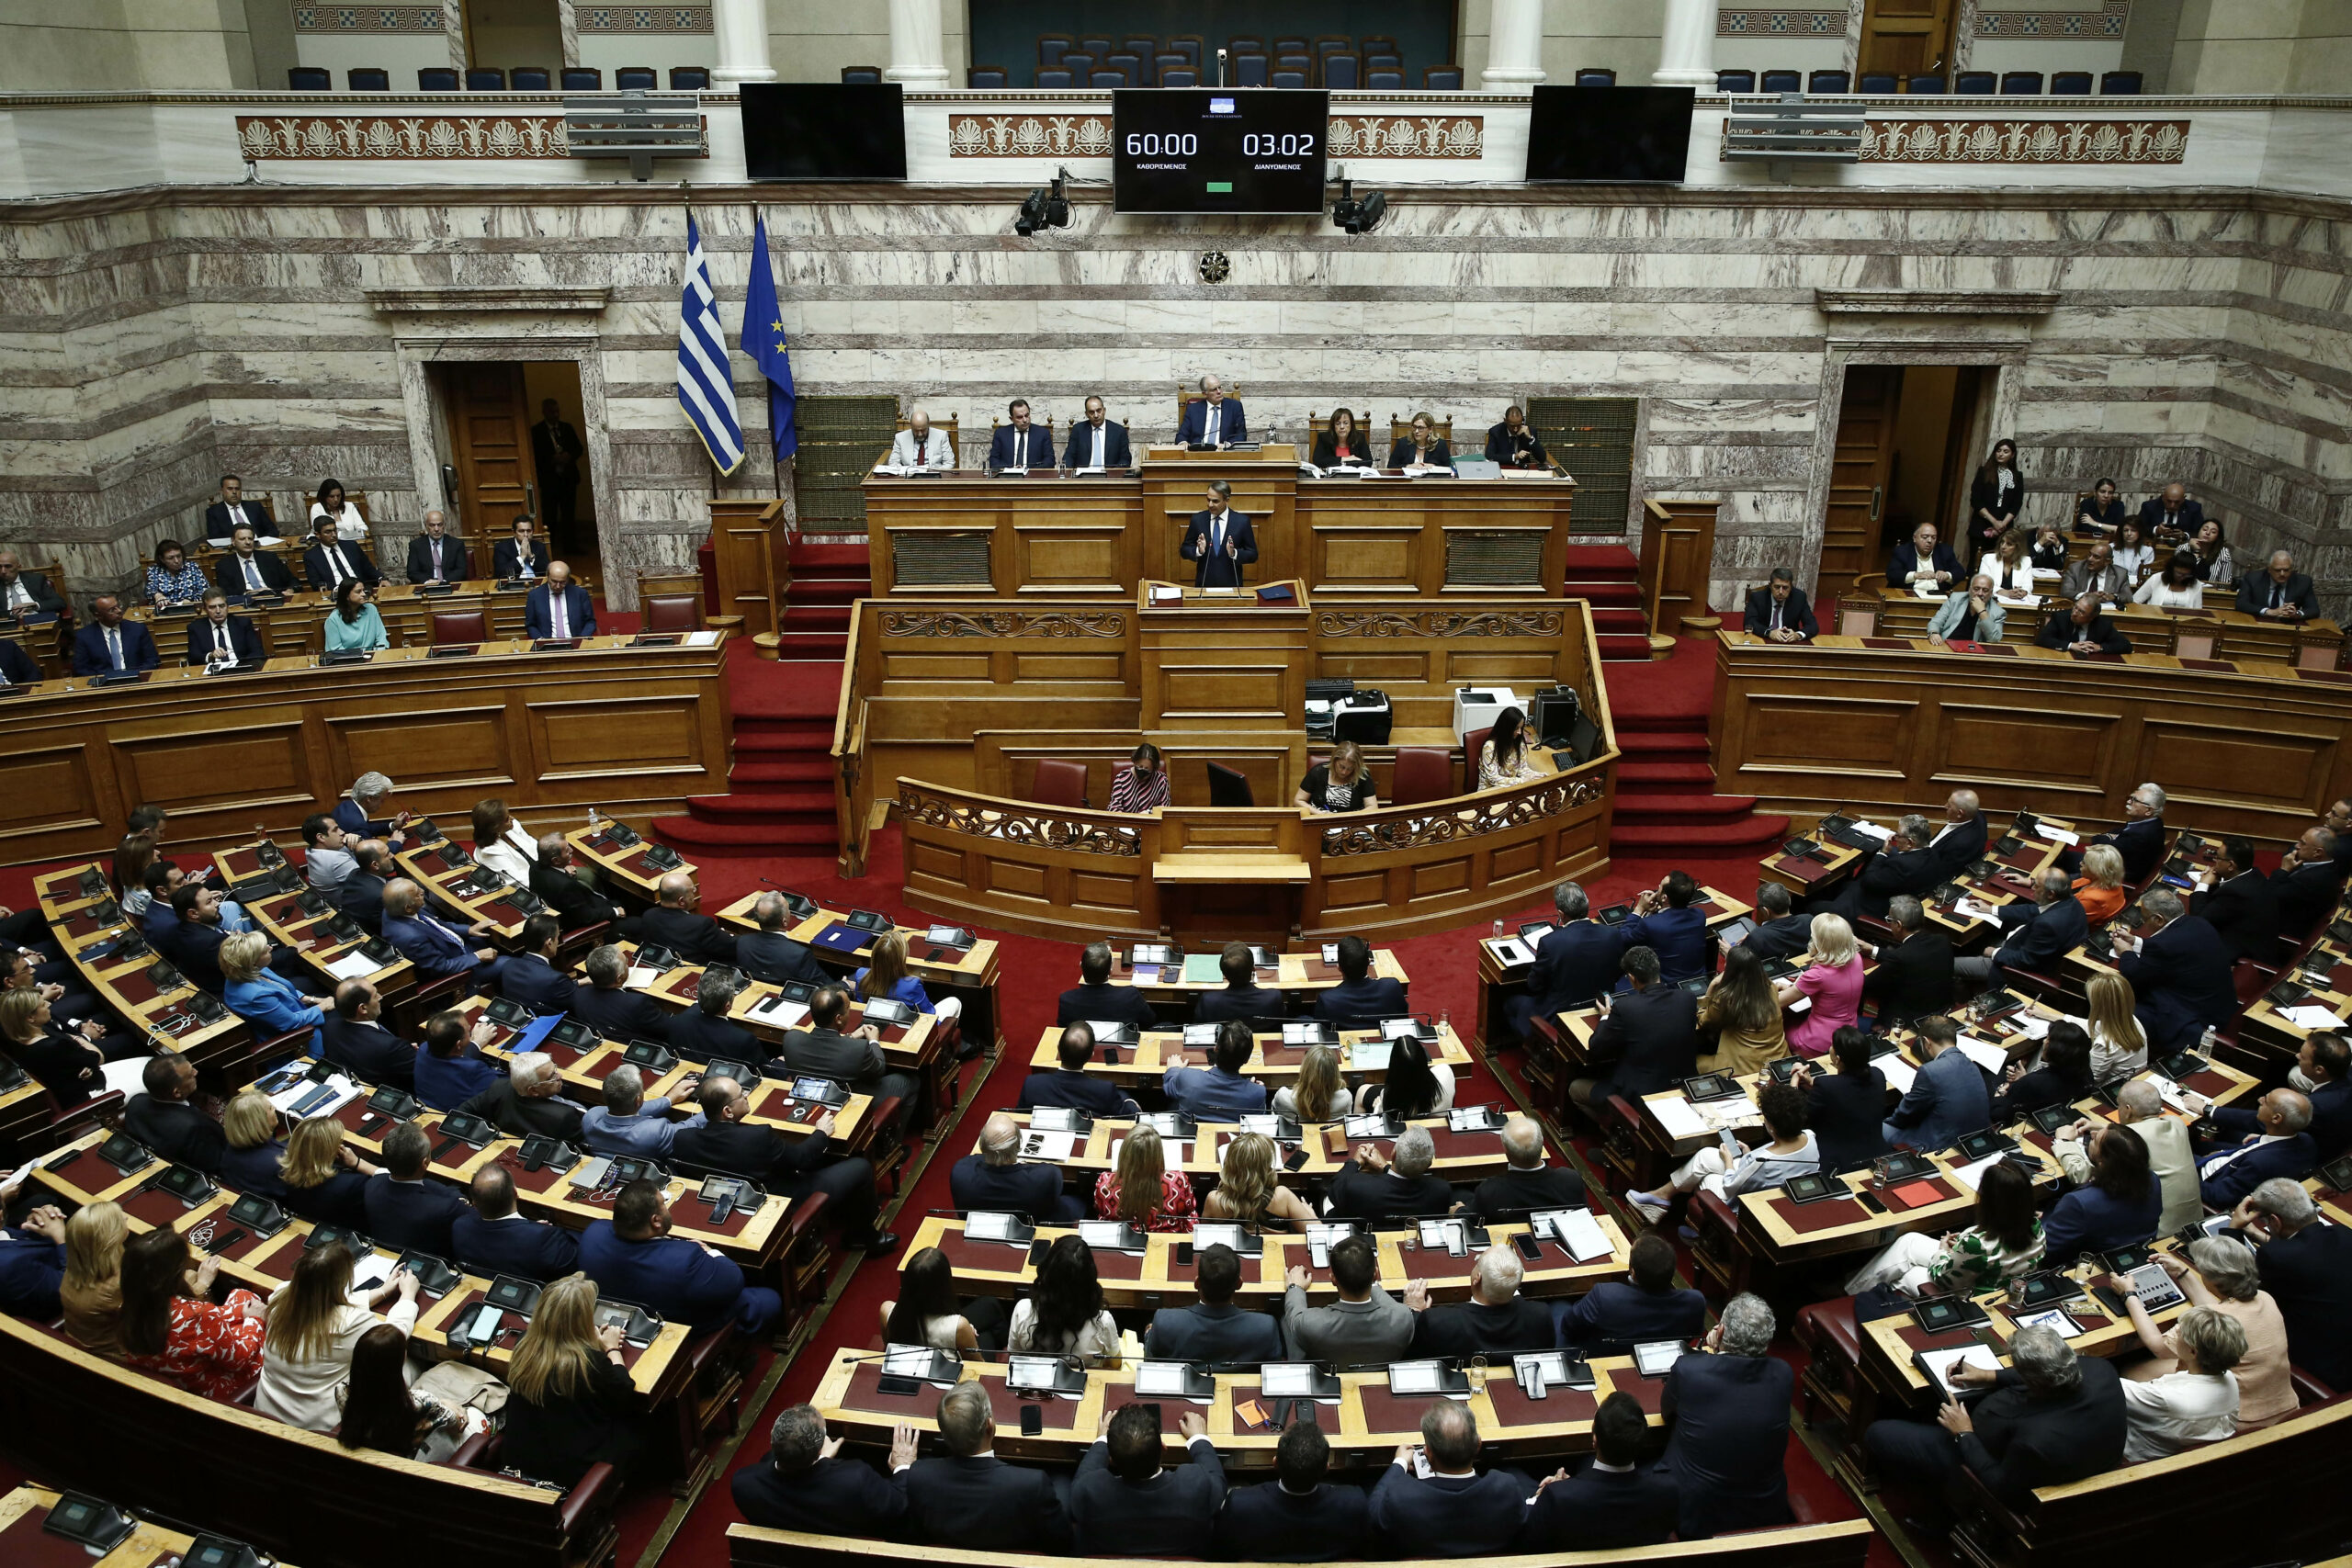 LIVE - Βουλή: Ψηφίζεται σήμερα στην Ολομέλεια το νομοσχέδιο που η αντιπολίτευση χαρακτηρίζει αντι - εργατικό νομοσχέδιο Ι ΒΙΝΤΕΟ